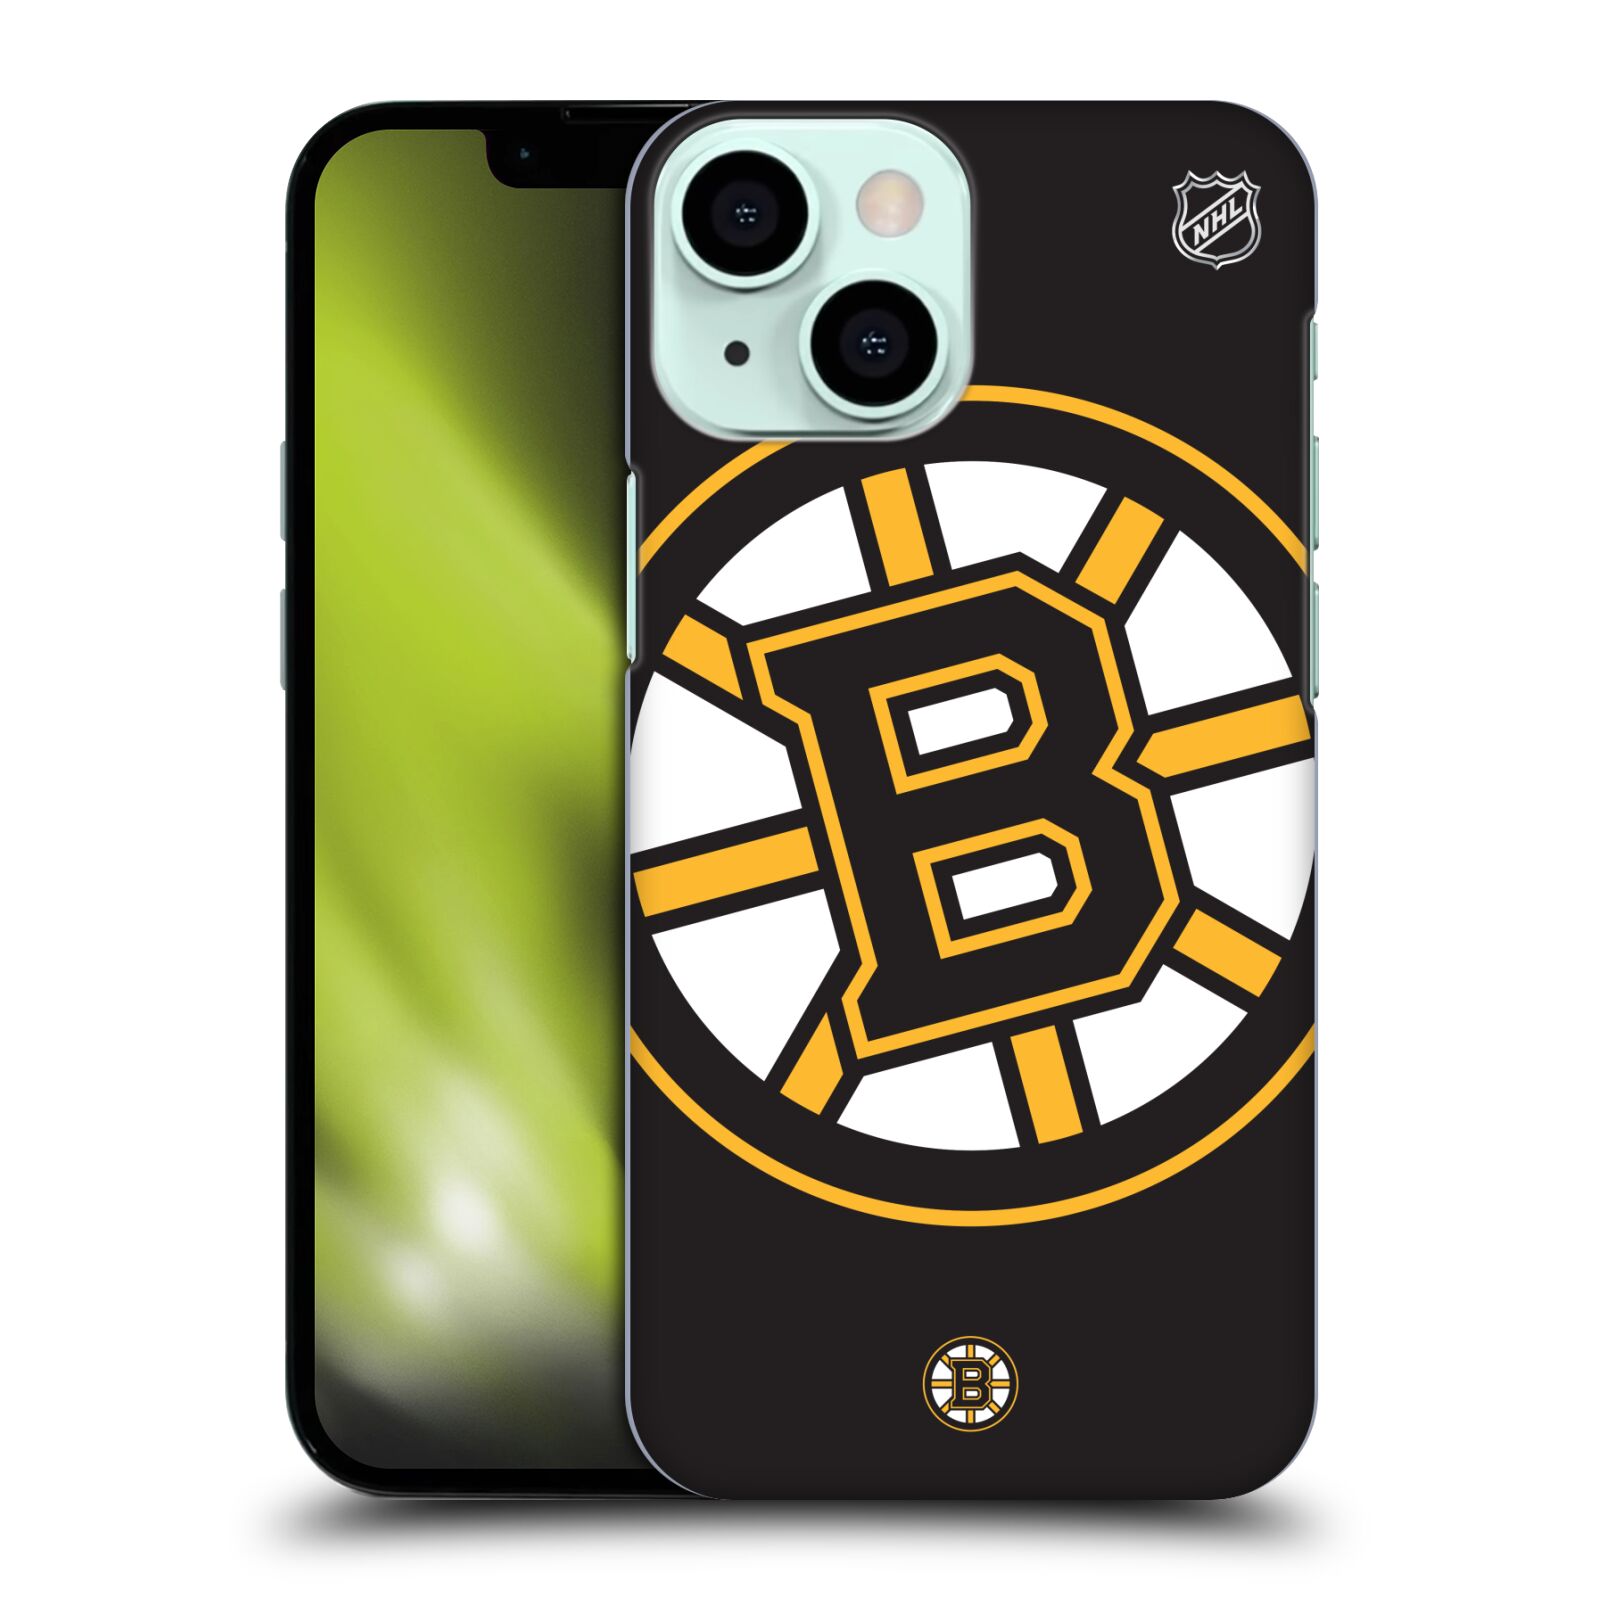 Plastové pouzdro na mobil Apple iPhone 13 Mini - NHL - Velké logo Boston Bruins (Plastový kryt, pouzdro, obal na mobilní telefon Apple iPhone 13 Mini s licencovaným motivem NHL - Velké logo Boston Bruins)